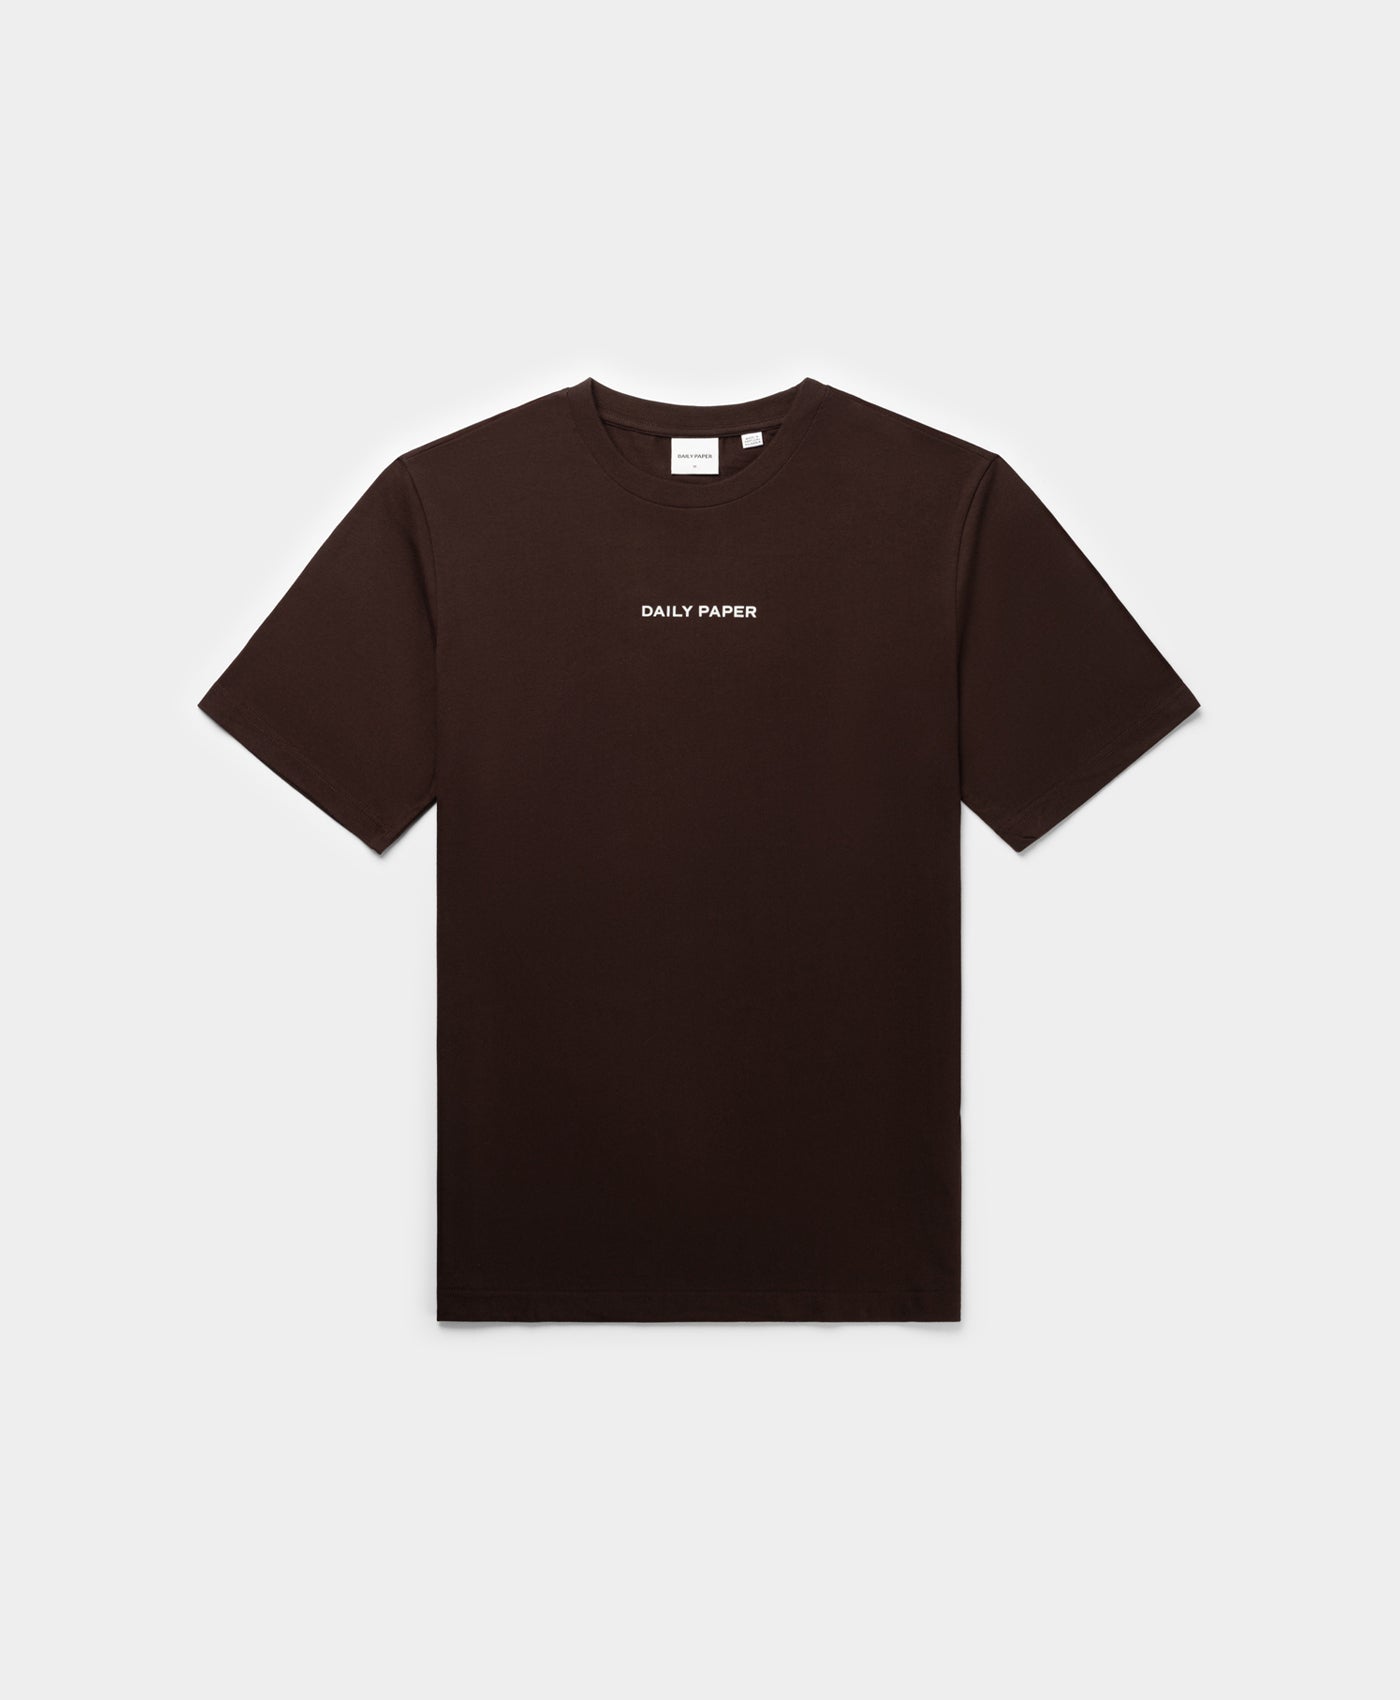 DP - Syrup Brown Etype T-Shirt - Packshot - Front